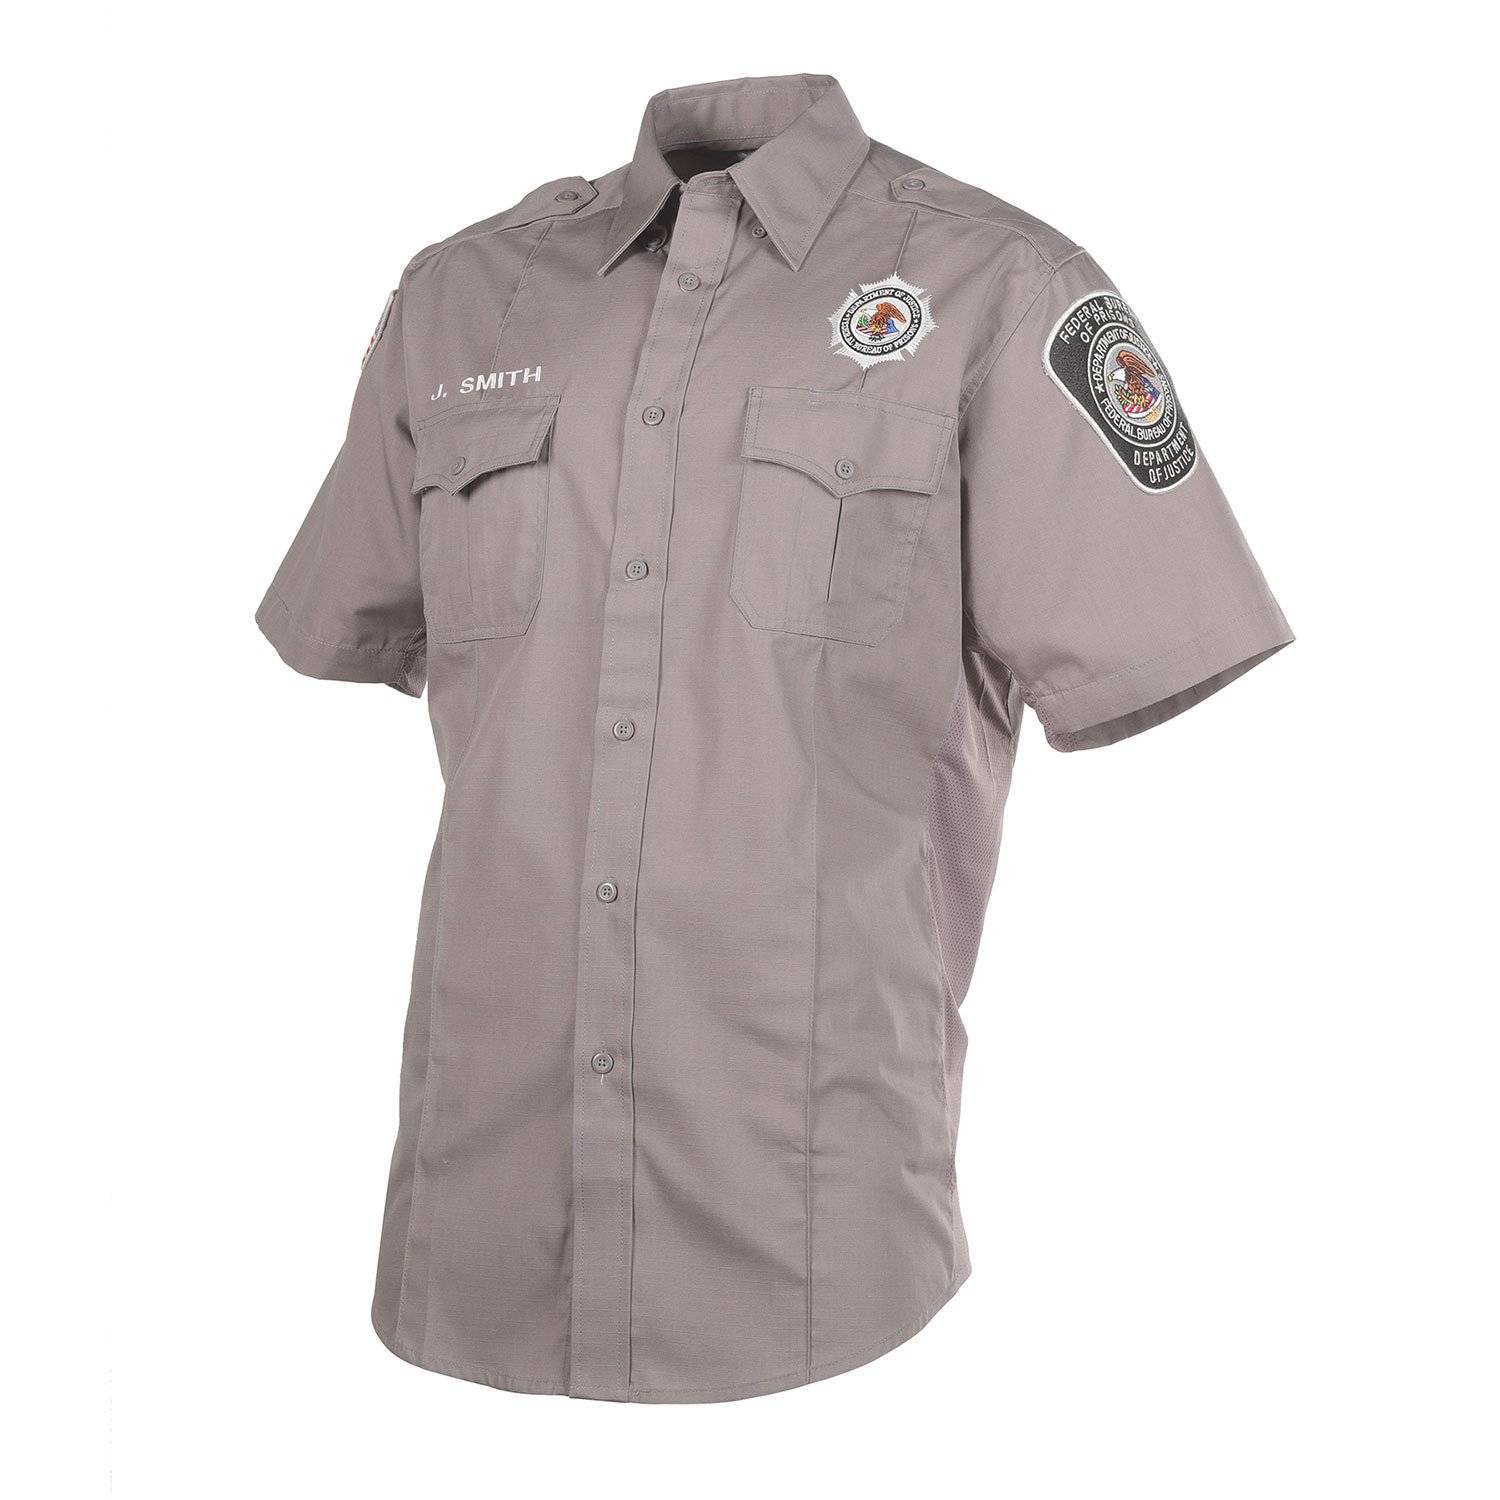 Galls FBOP Men's Utility Short-Sleeve Uniform Shirt (Nickel